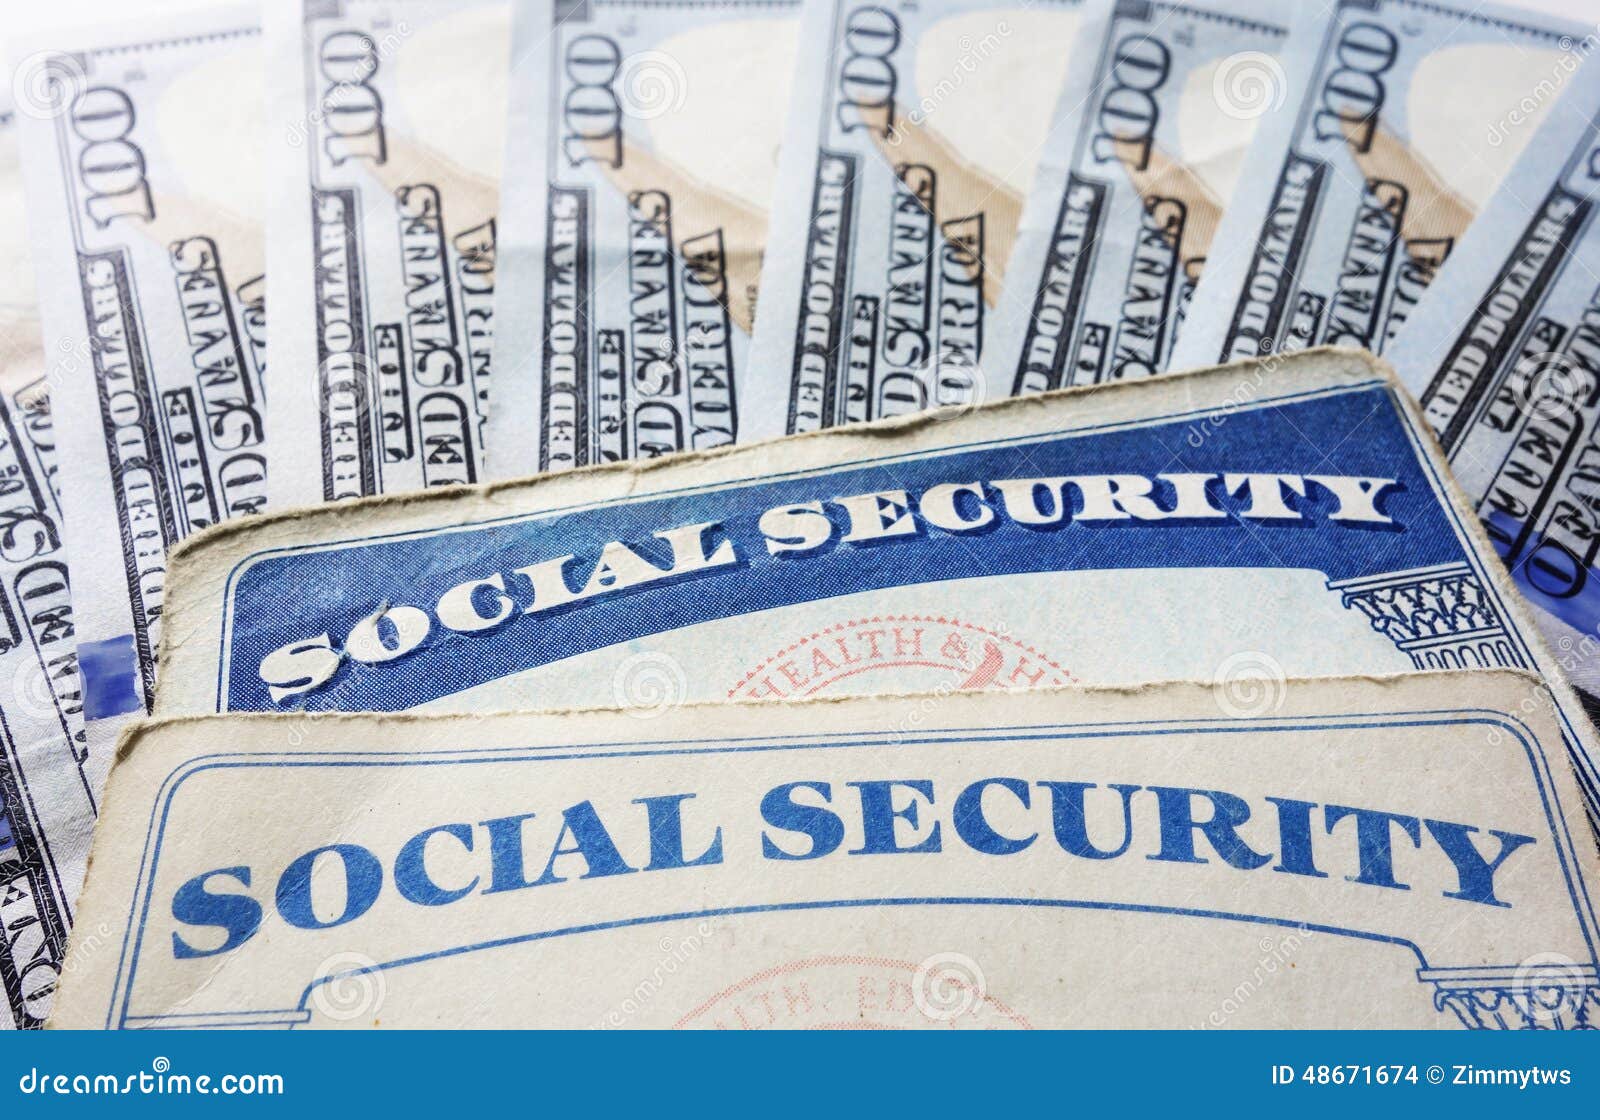 social security card clipart - photo #27